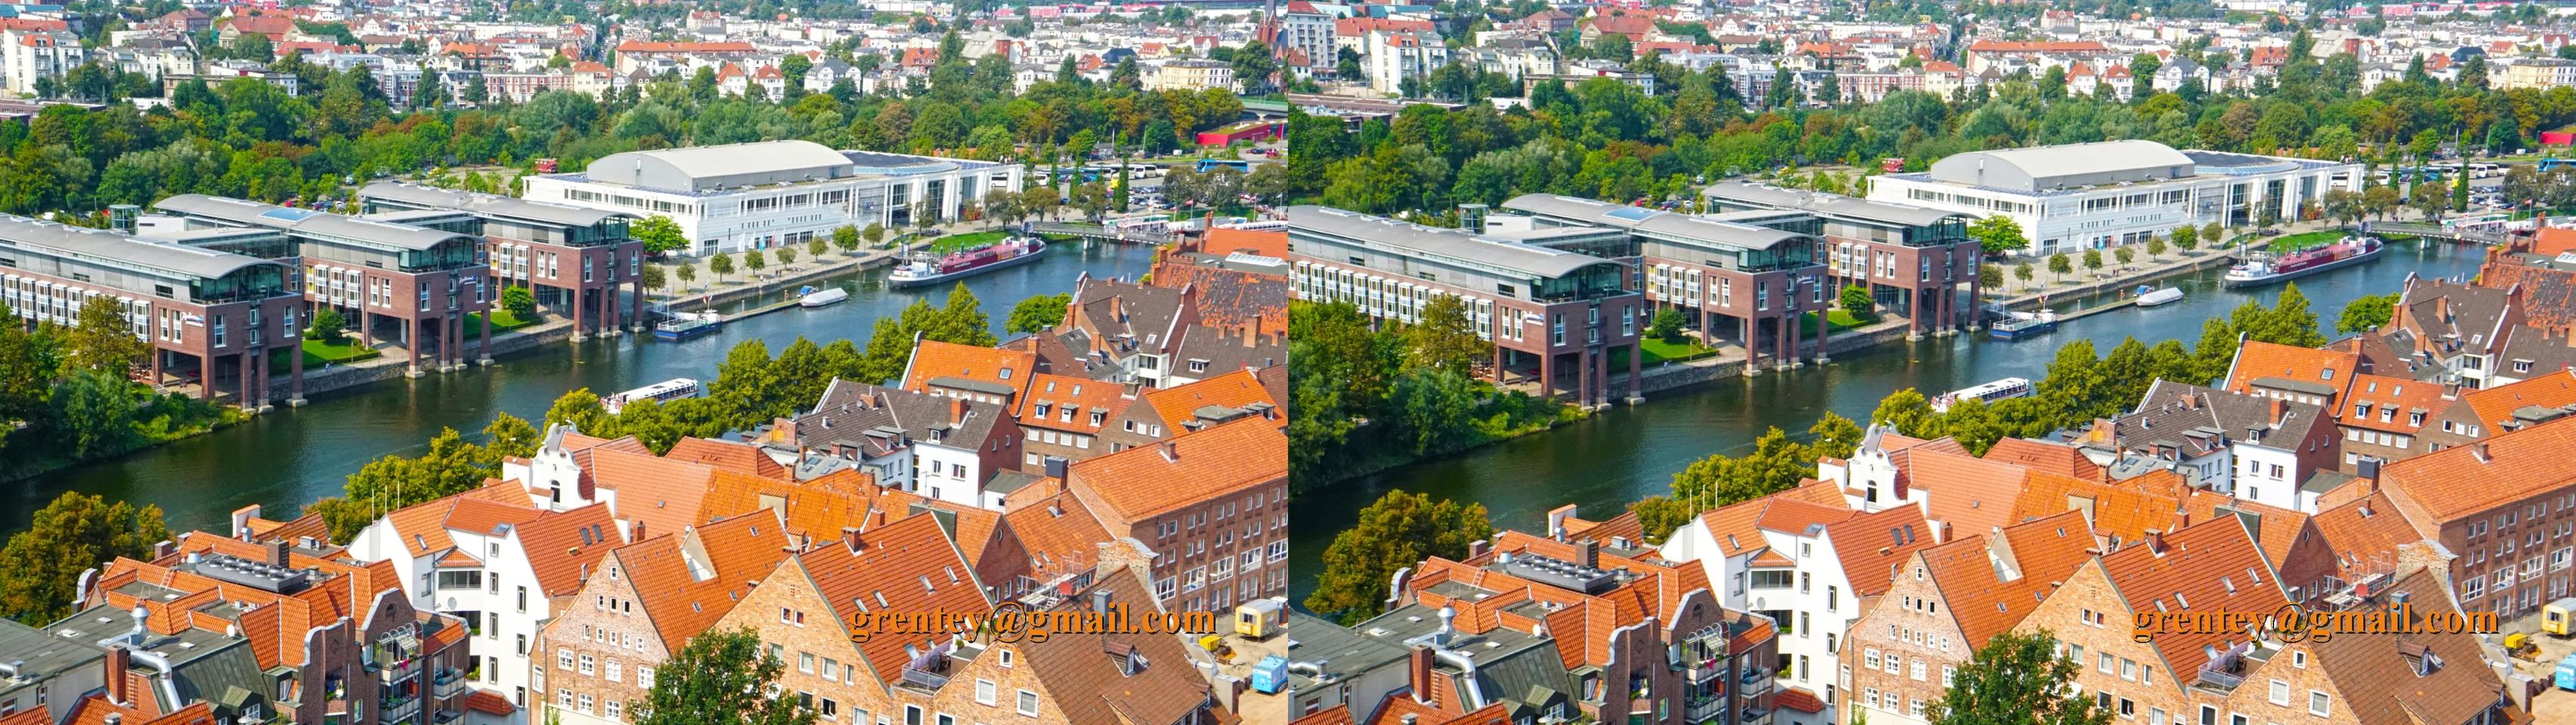 ISU World Congress 2019, Lübeck, Germany (F)